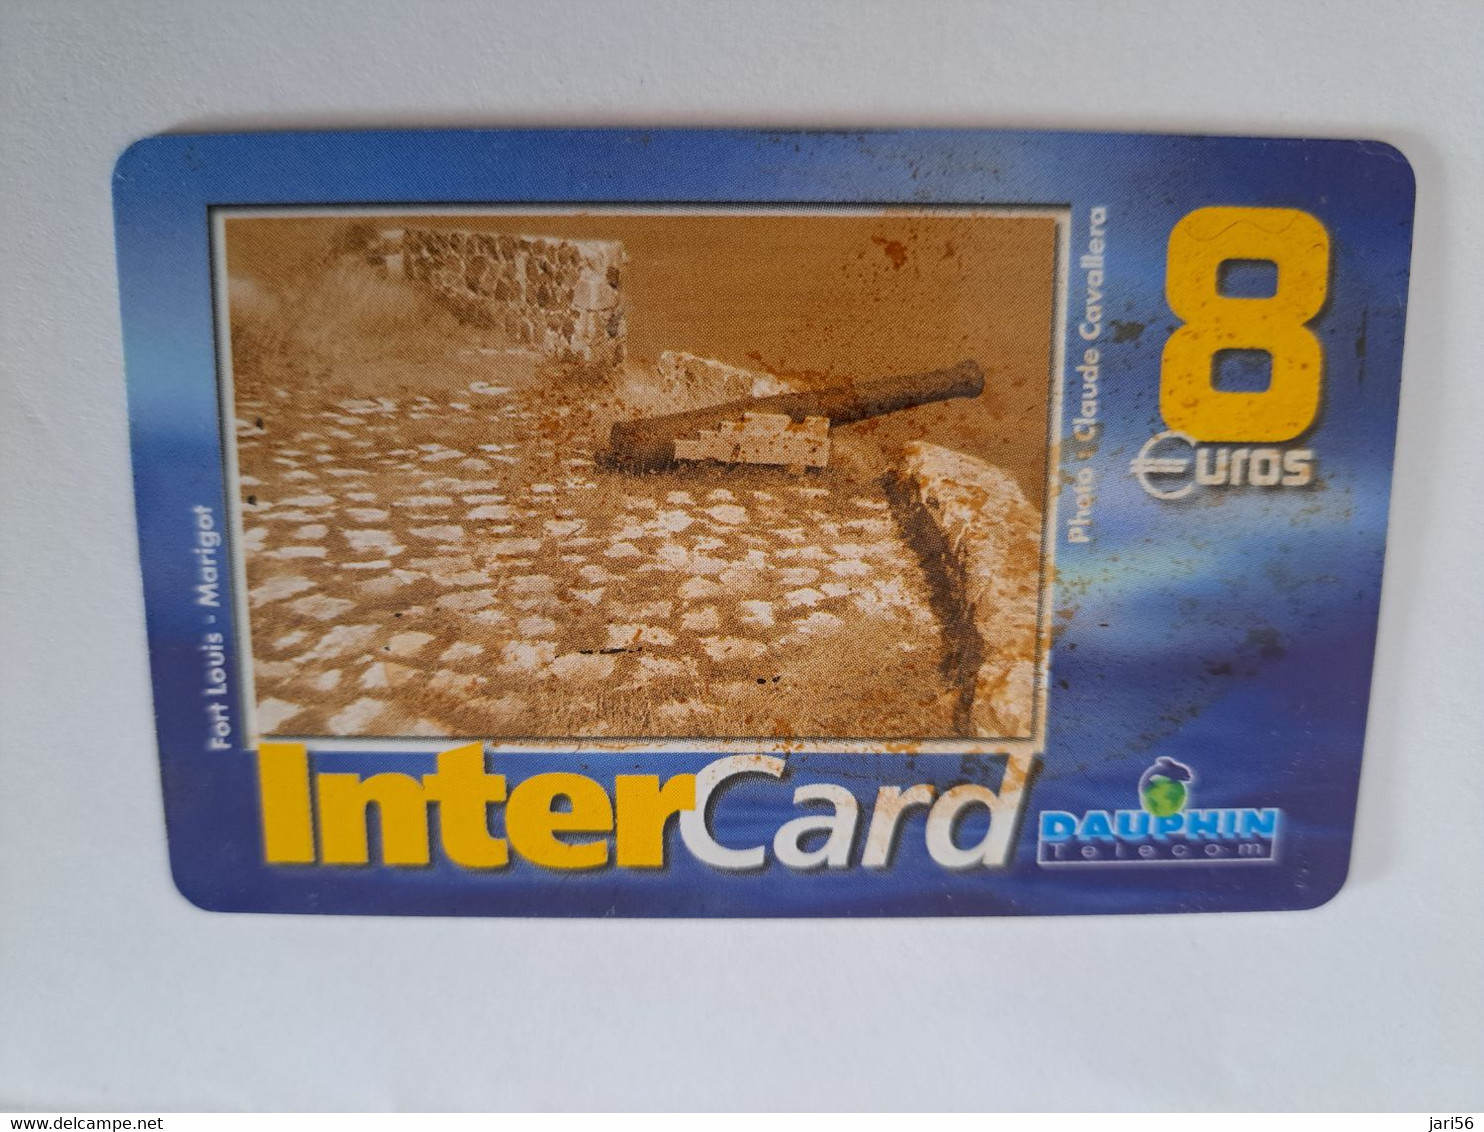 ST MARTIN / INTERCARD  8 EURO  FORT LOUIS MARIGOT          NO 103 Fine Used Card    ** 10911** - Antillen (Frans)